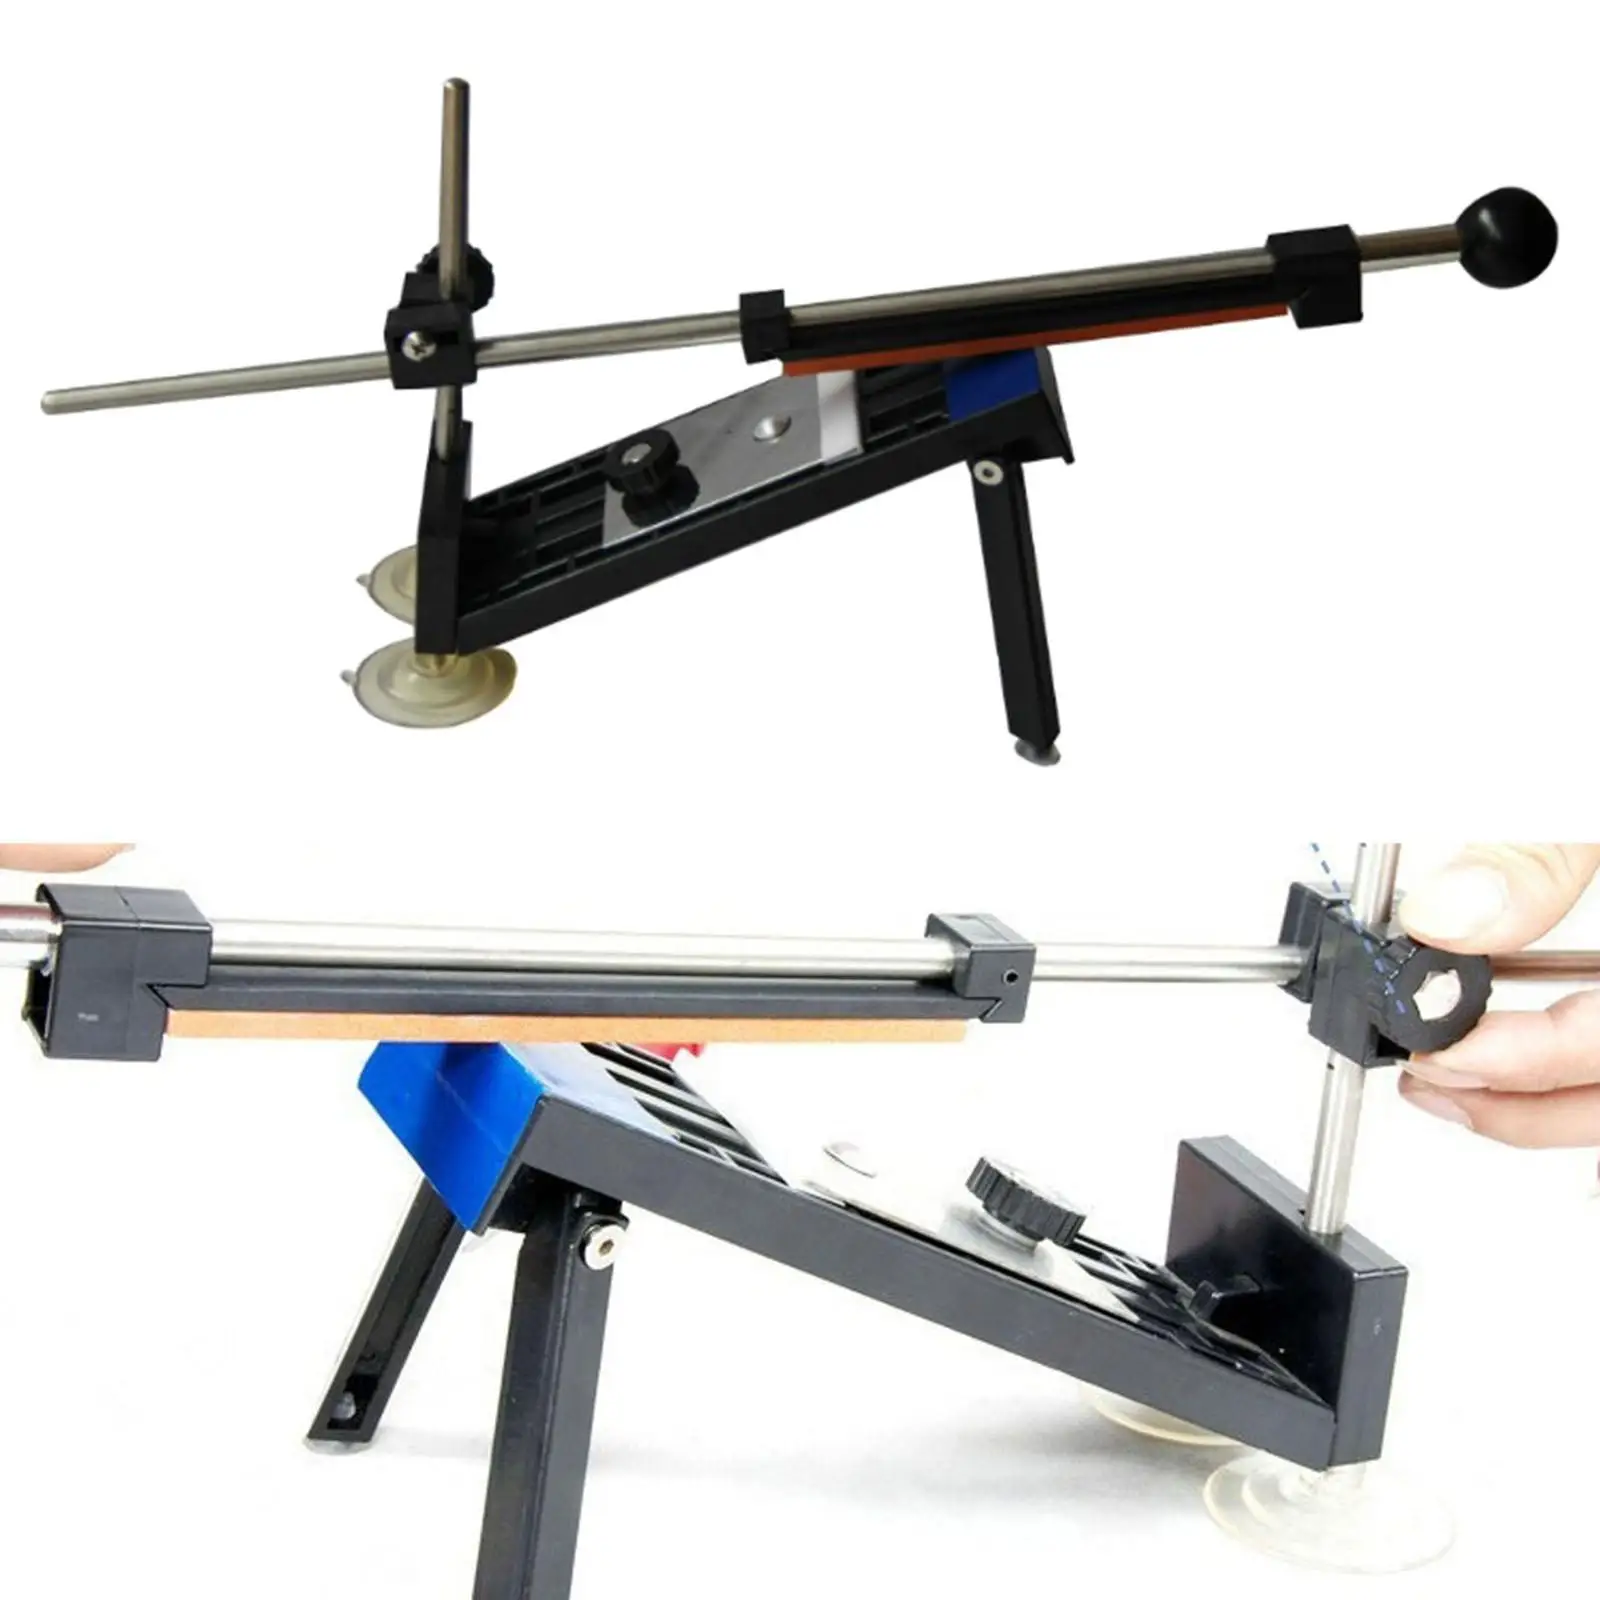 Professional Sharpener Fine Grinding Polishing Tool Multifunction Fixed Angle Adjustable Sharpening Kit System Grinder